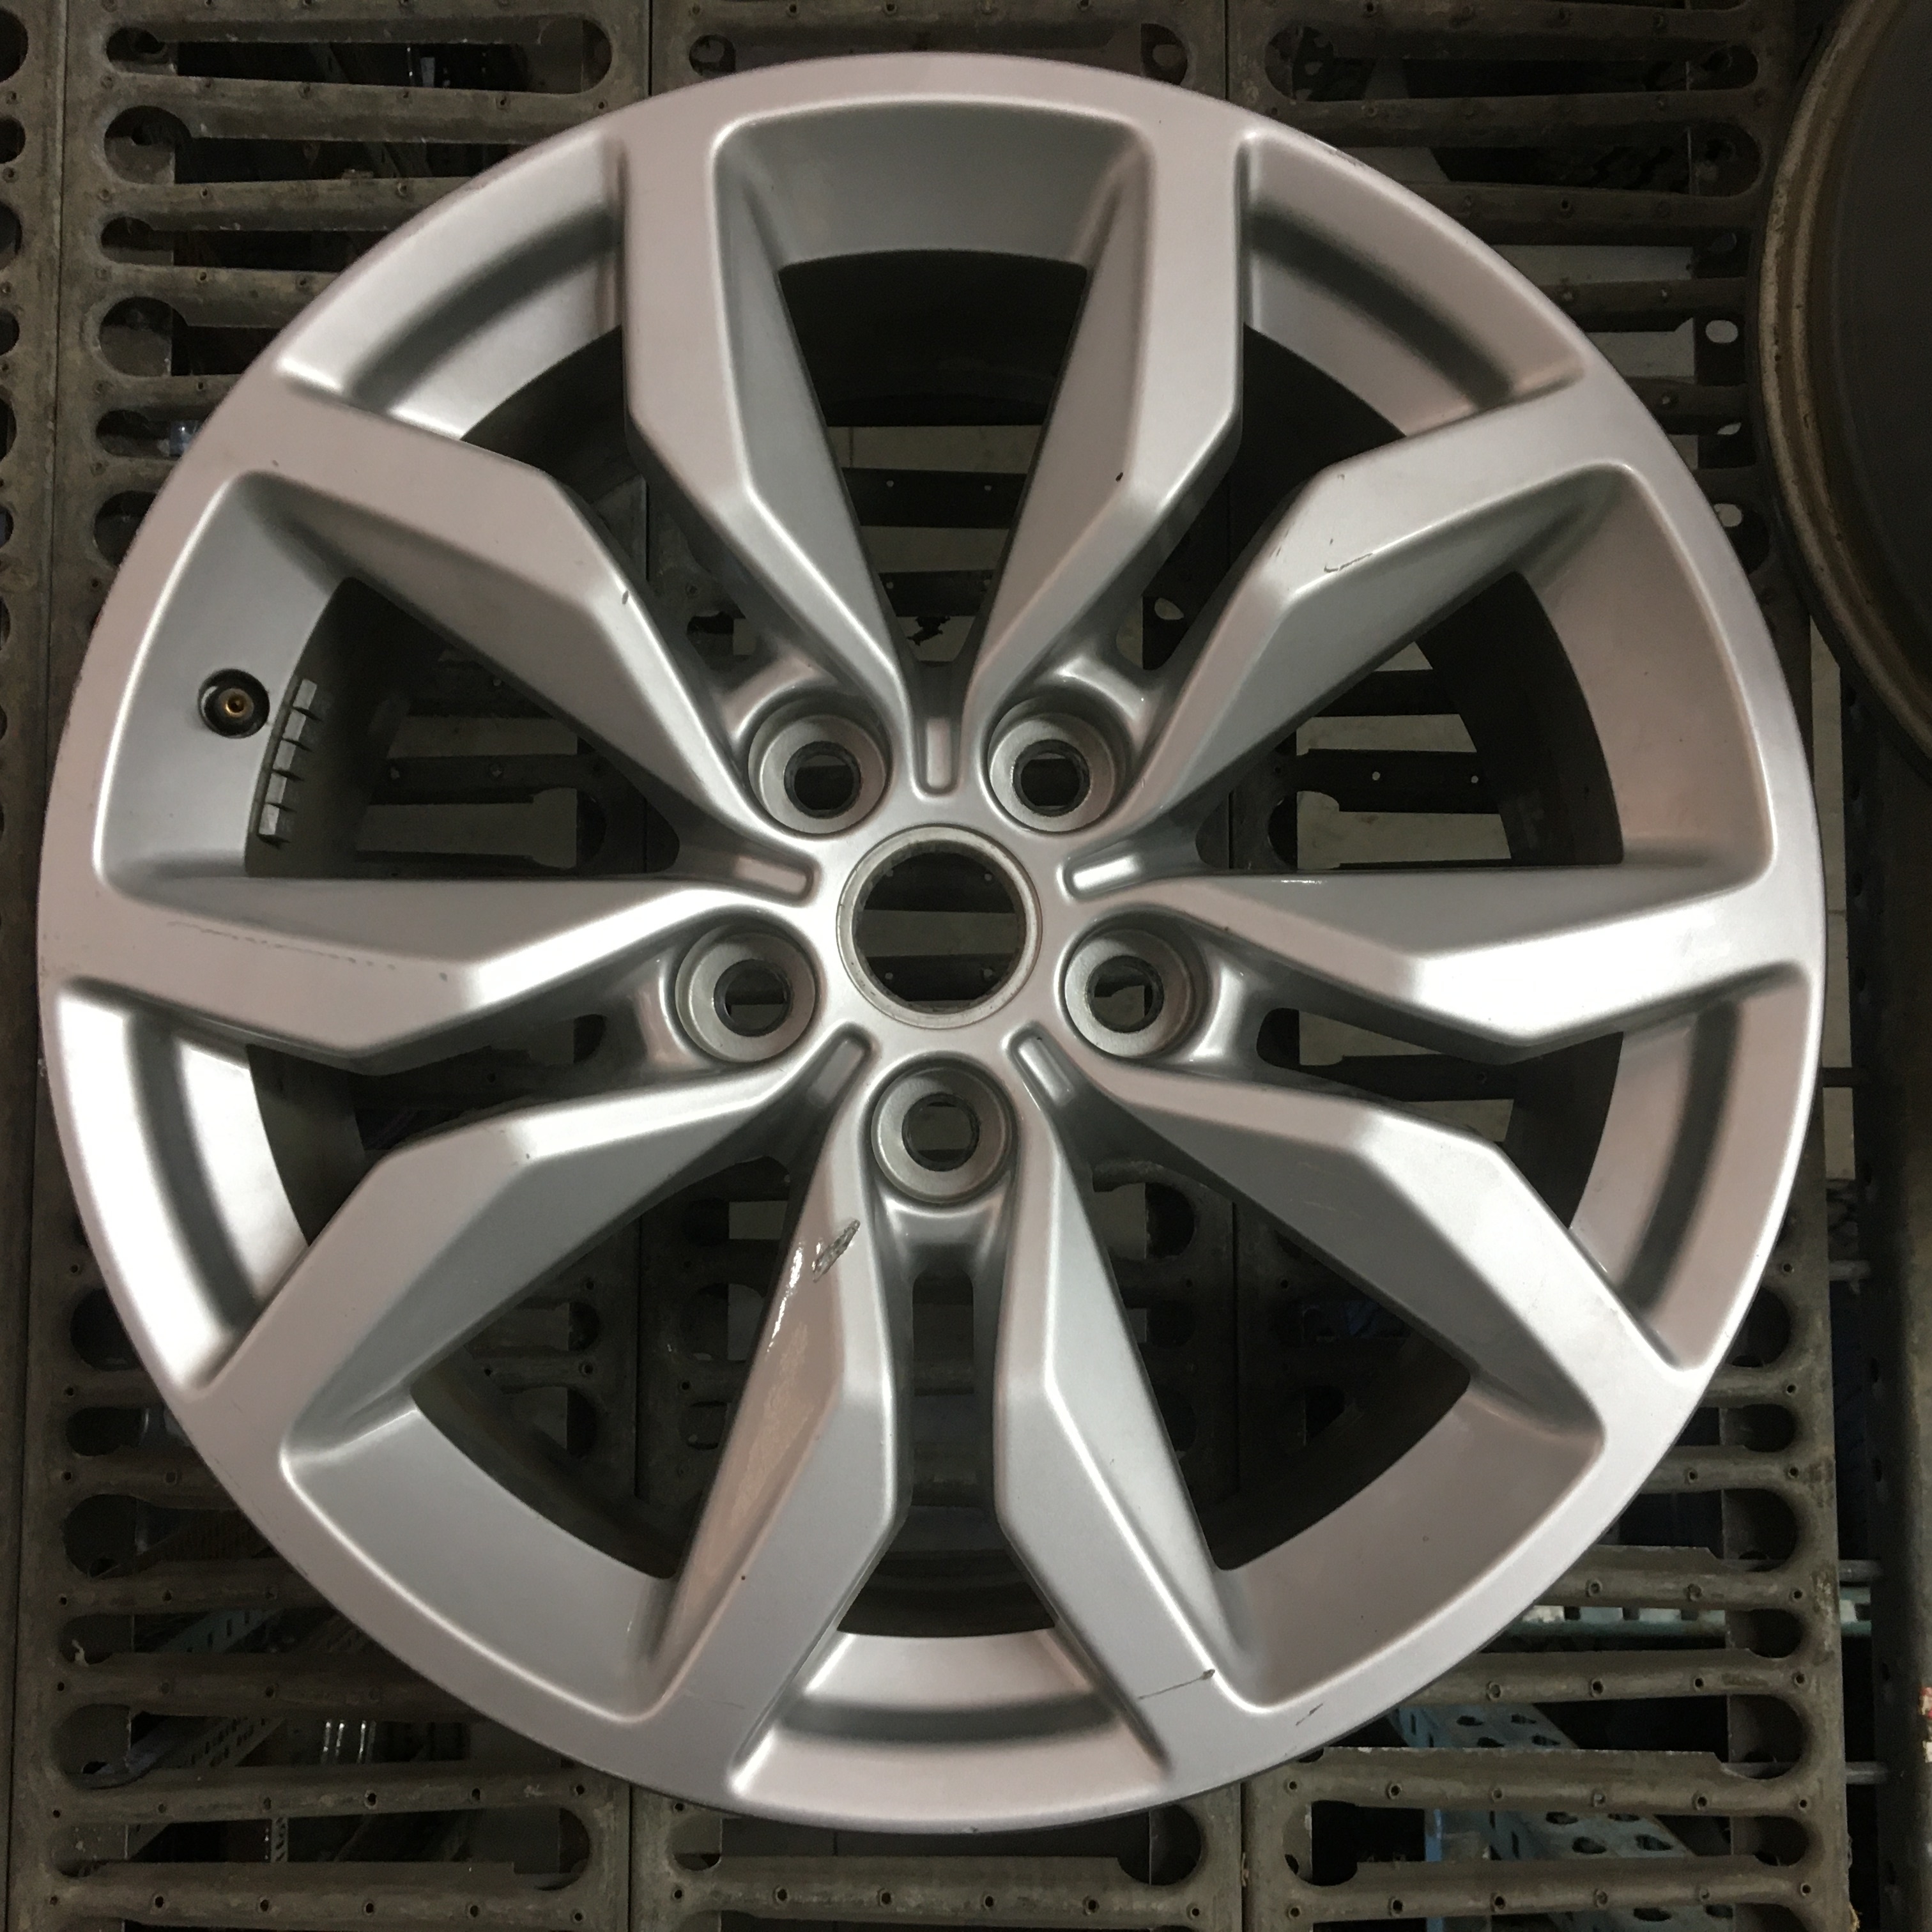 2016 2017 2018 Chevrolet Impala 18" OEM Rim Wheel 5712 | eBay What Size Tires Are On A 2017 Chevy Impala